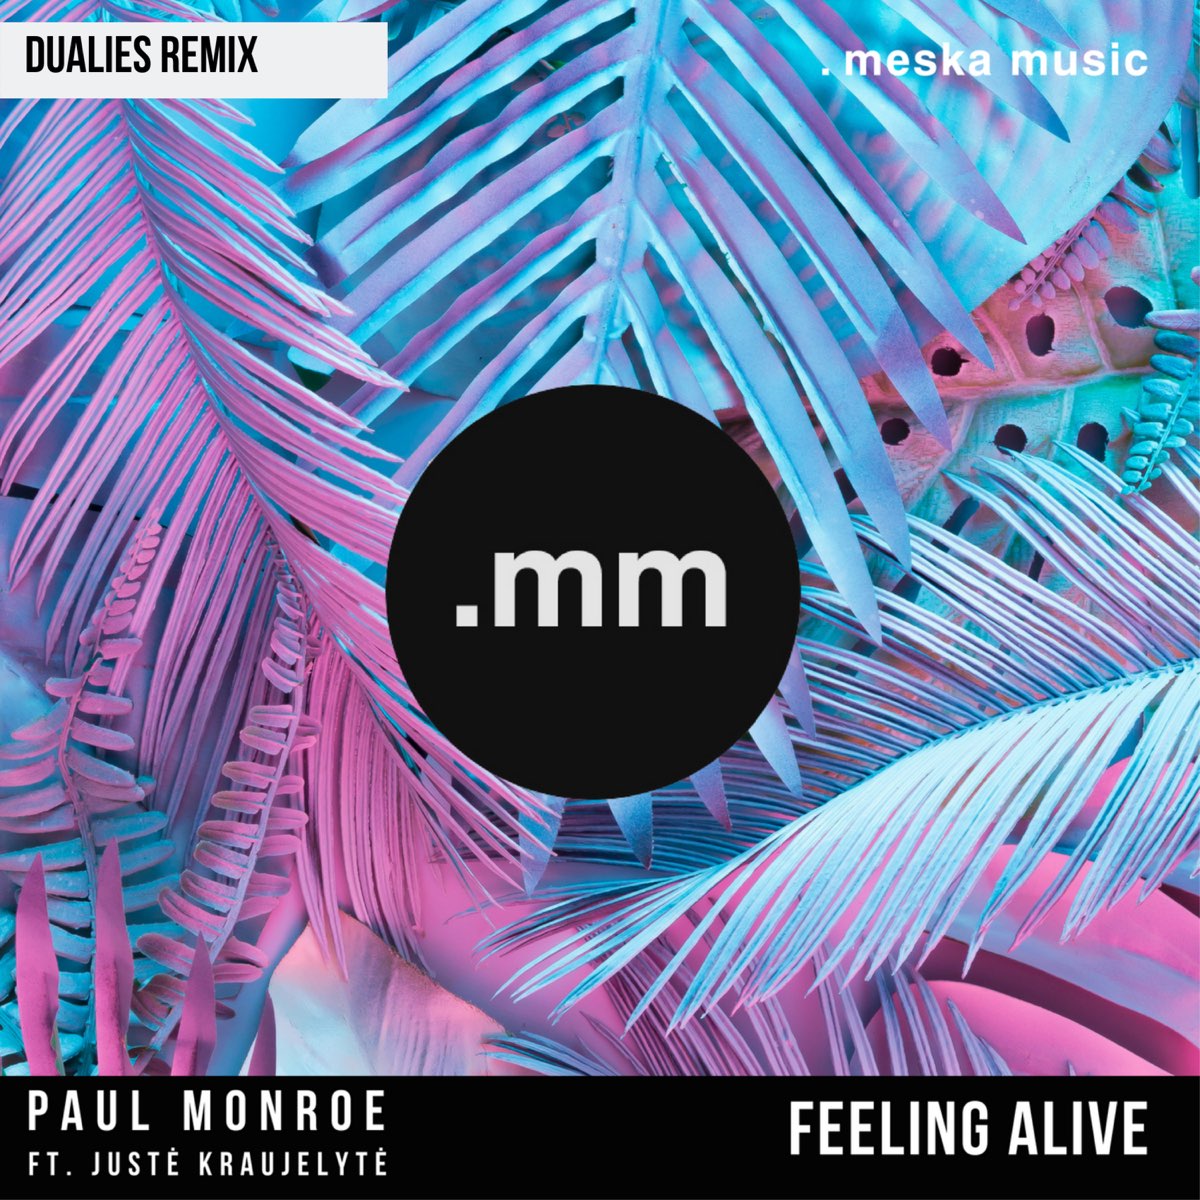 Paul ремикс. Paul Monroe. Feeling Alive. Grafix - feel Alive (ft. Lauren l'aimant). Toronto feeling Alive.